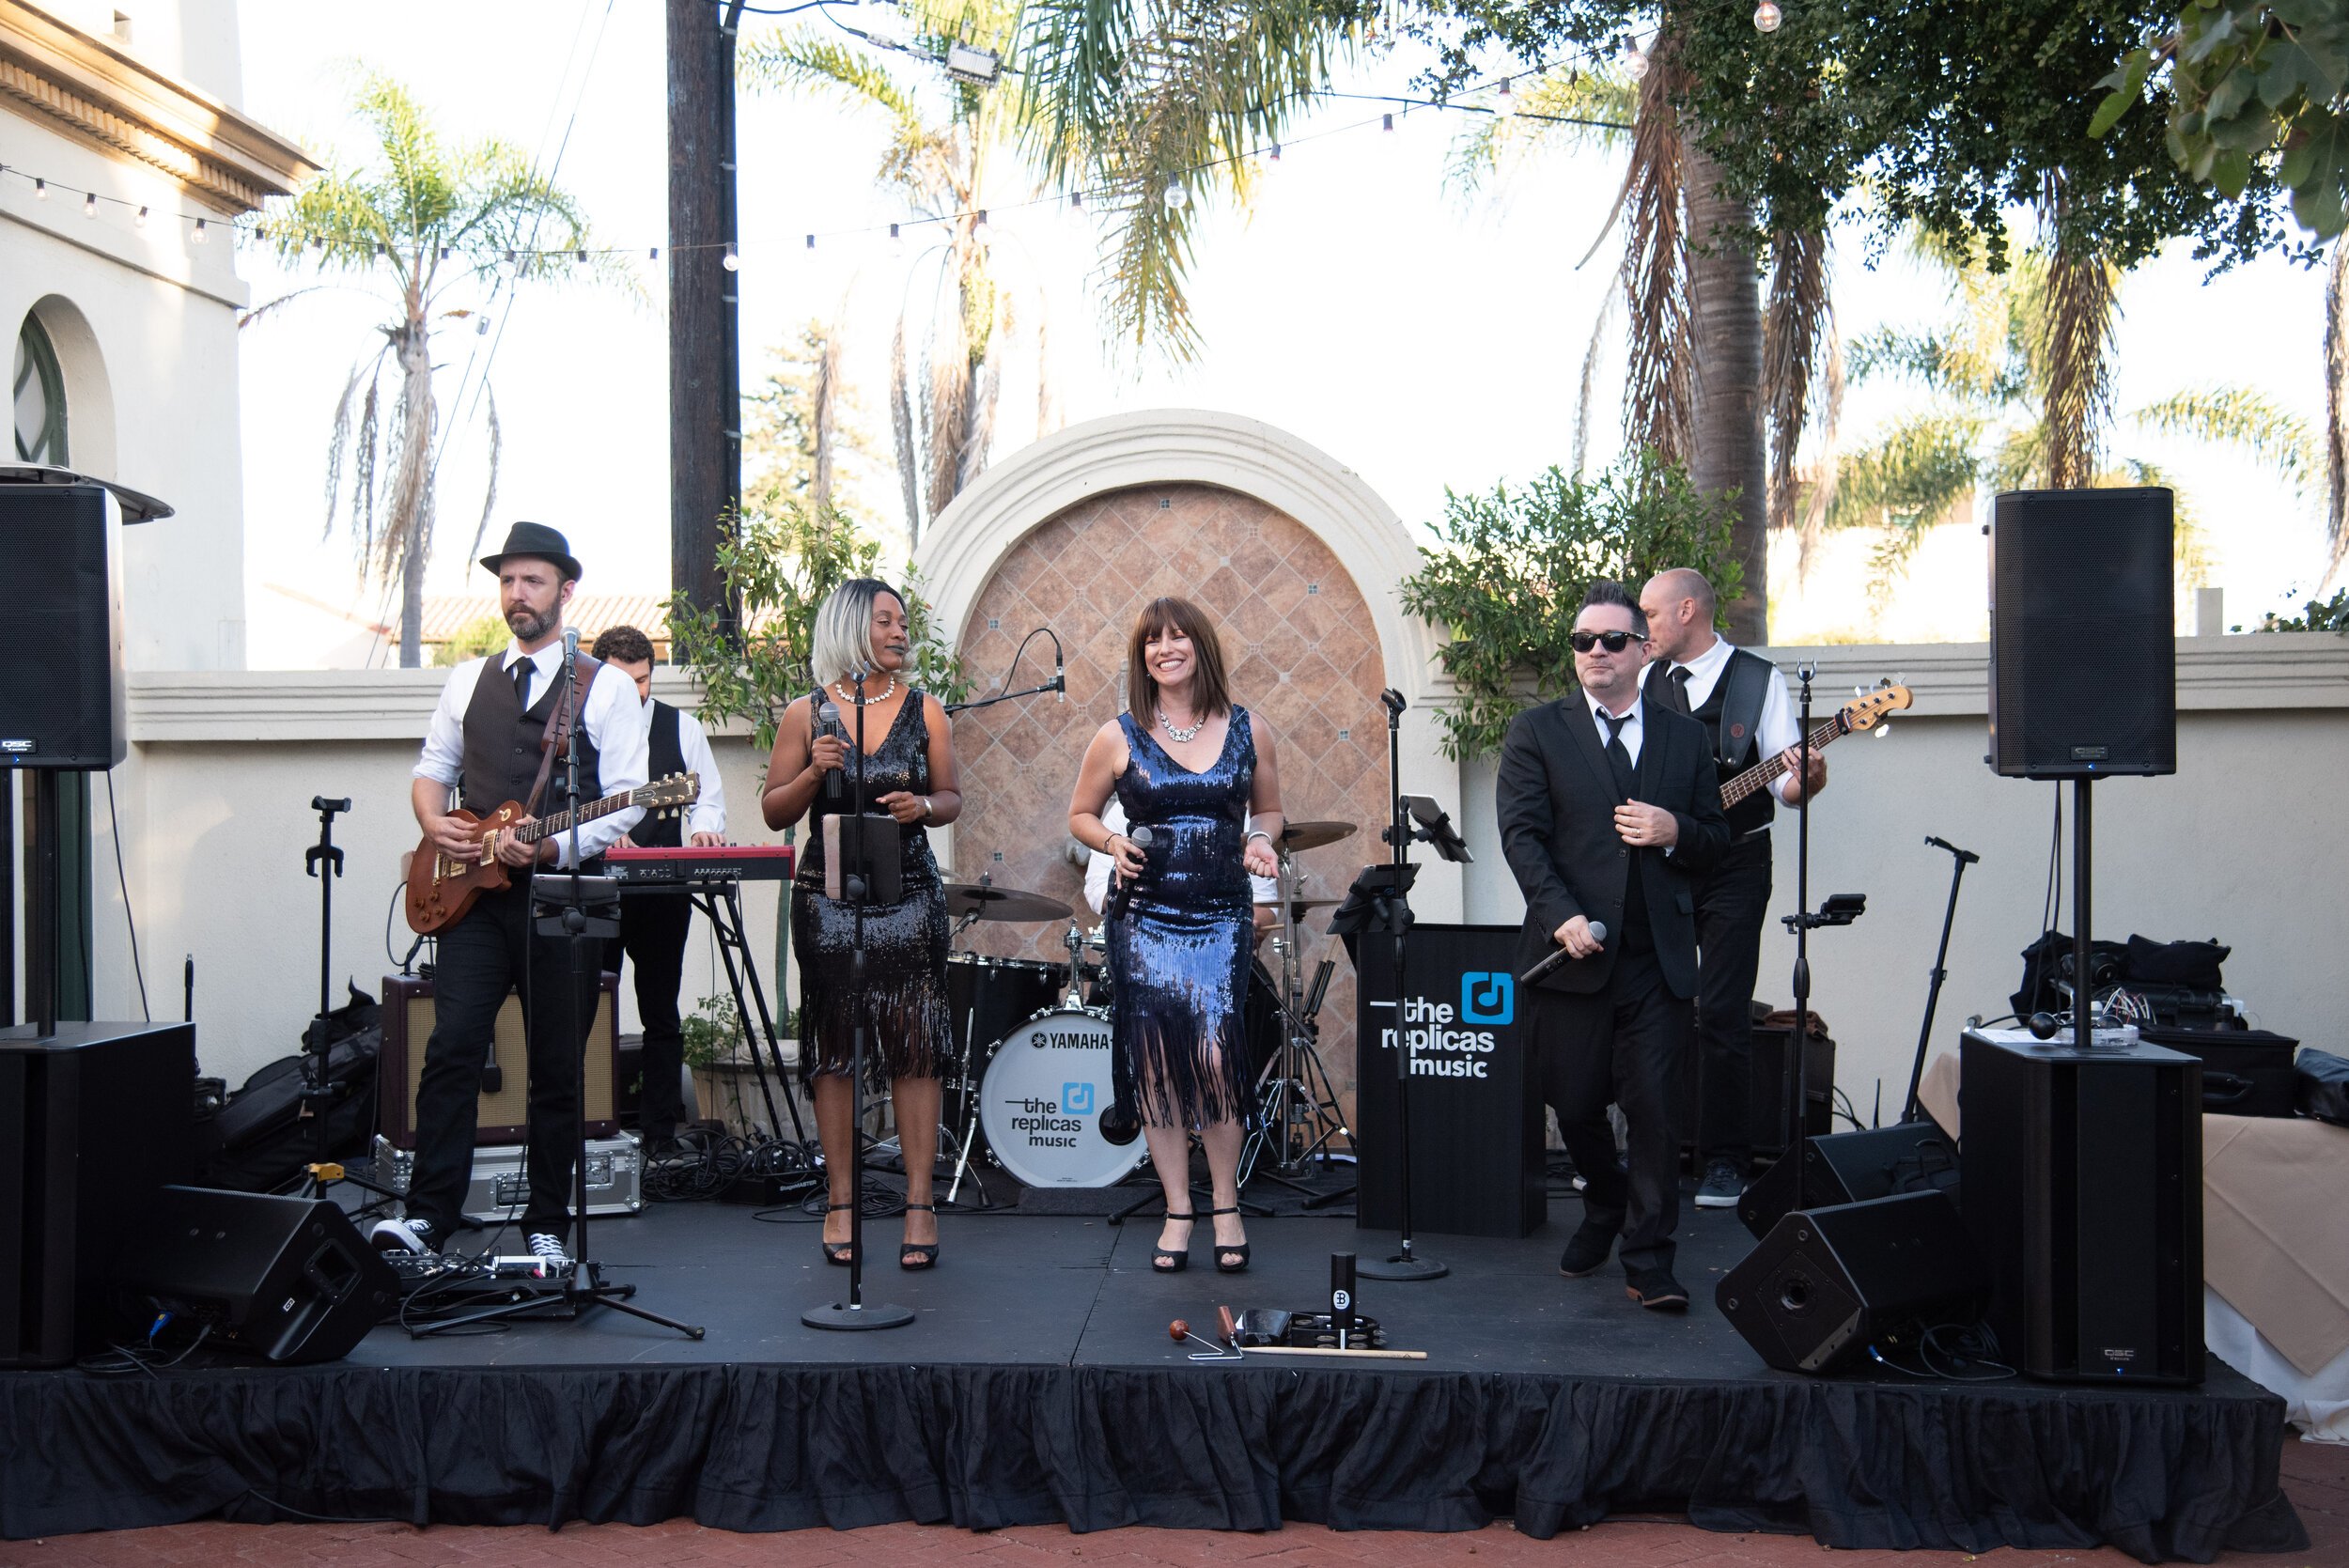 www.santabarbarawedding.com | Rewind Photography | Santa Barbara Club | The Replicas Music | The Full Main Attraction Band